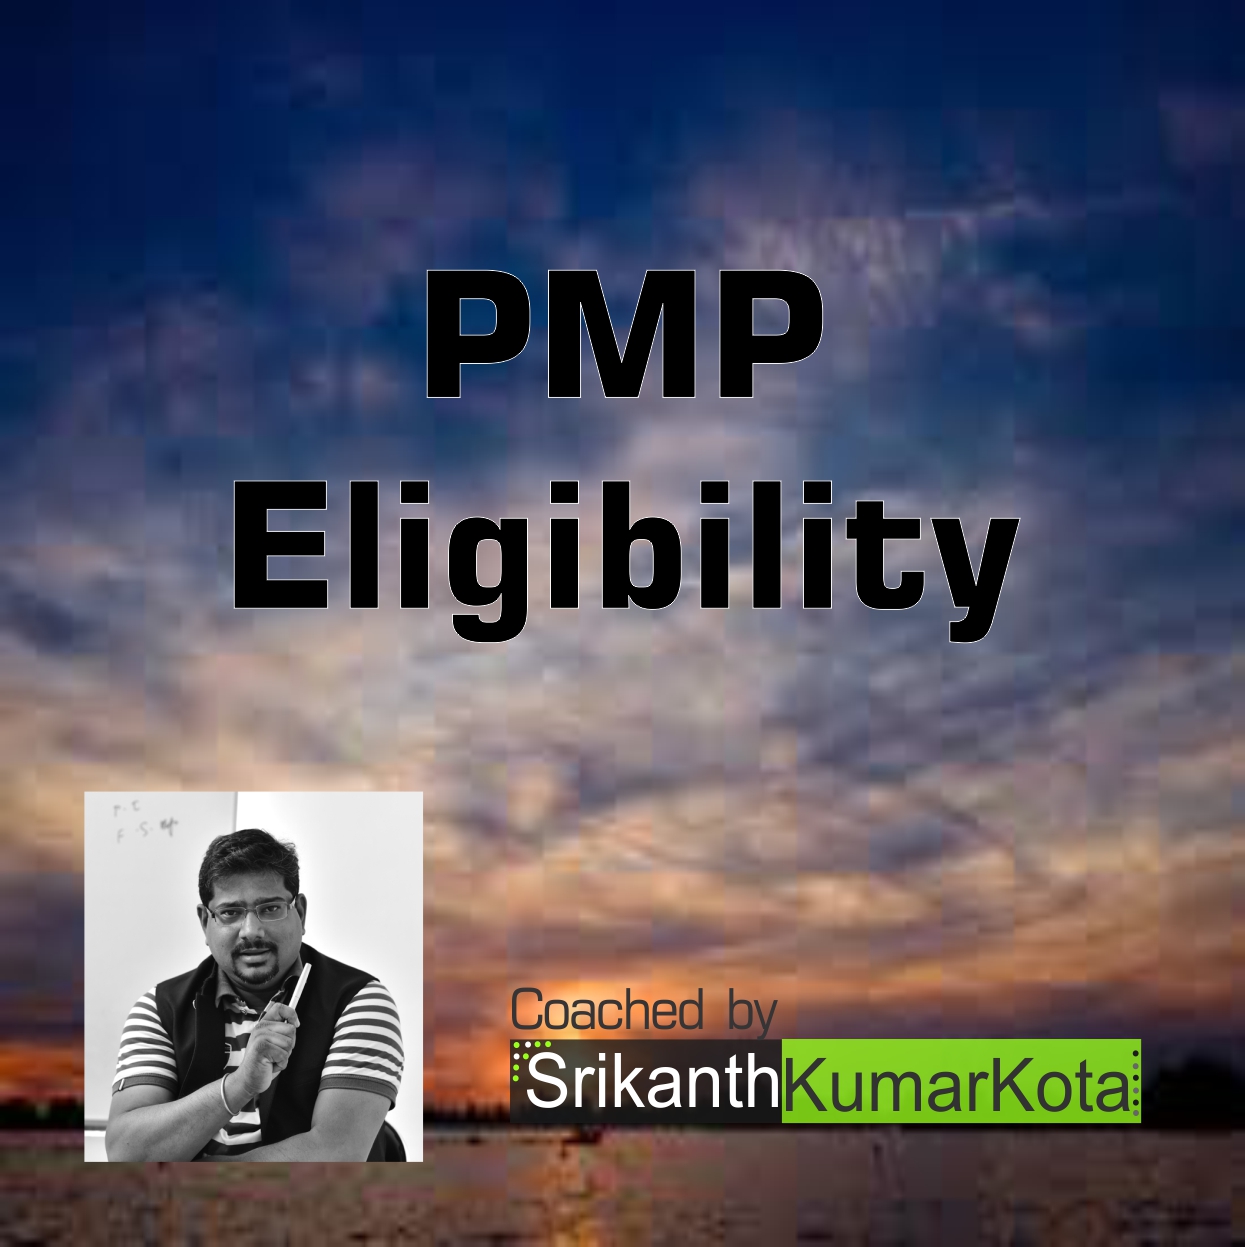 pmp eligibility